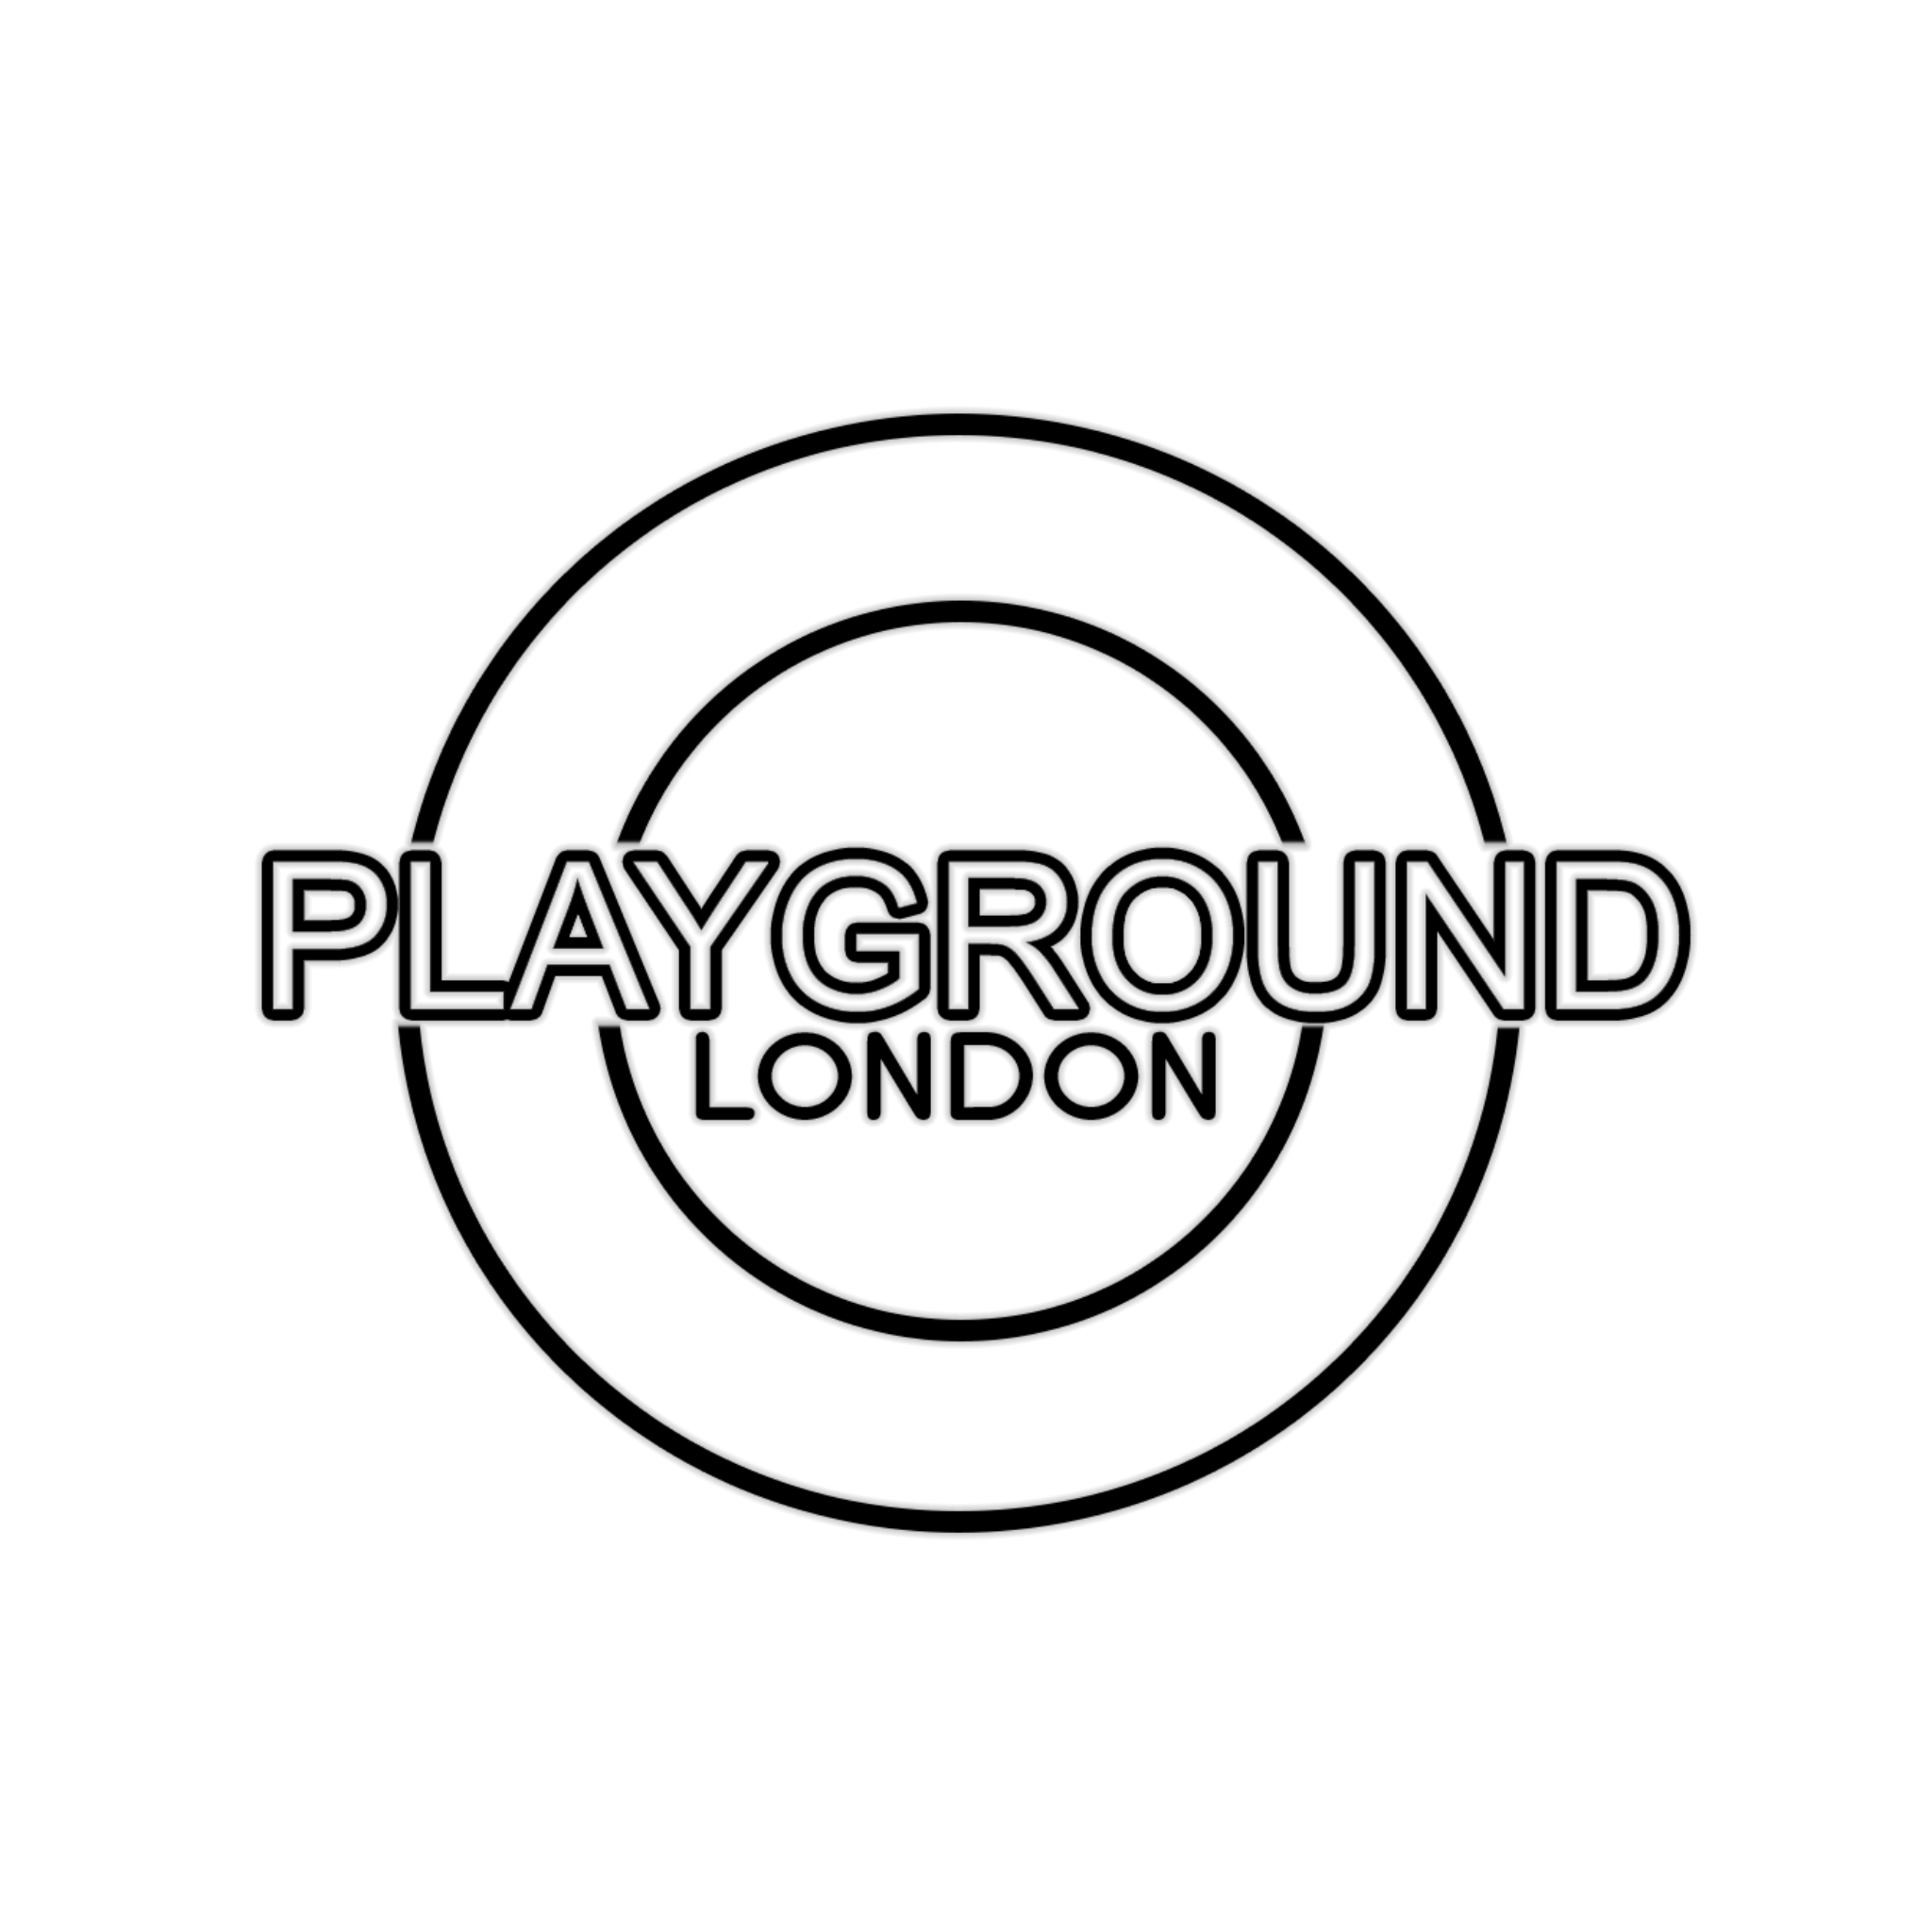 Playground LONDON